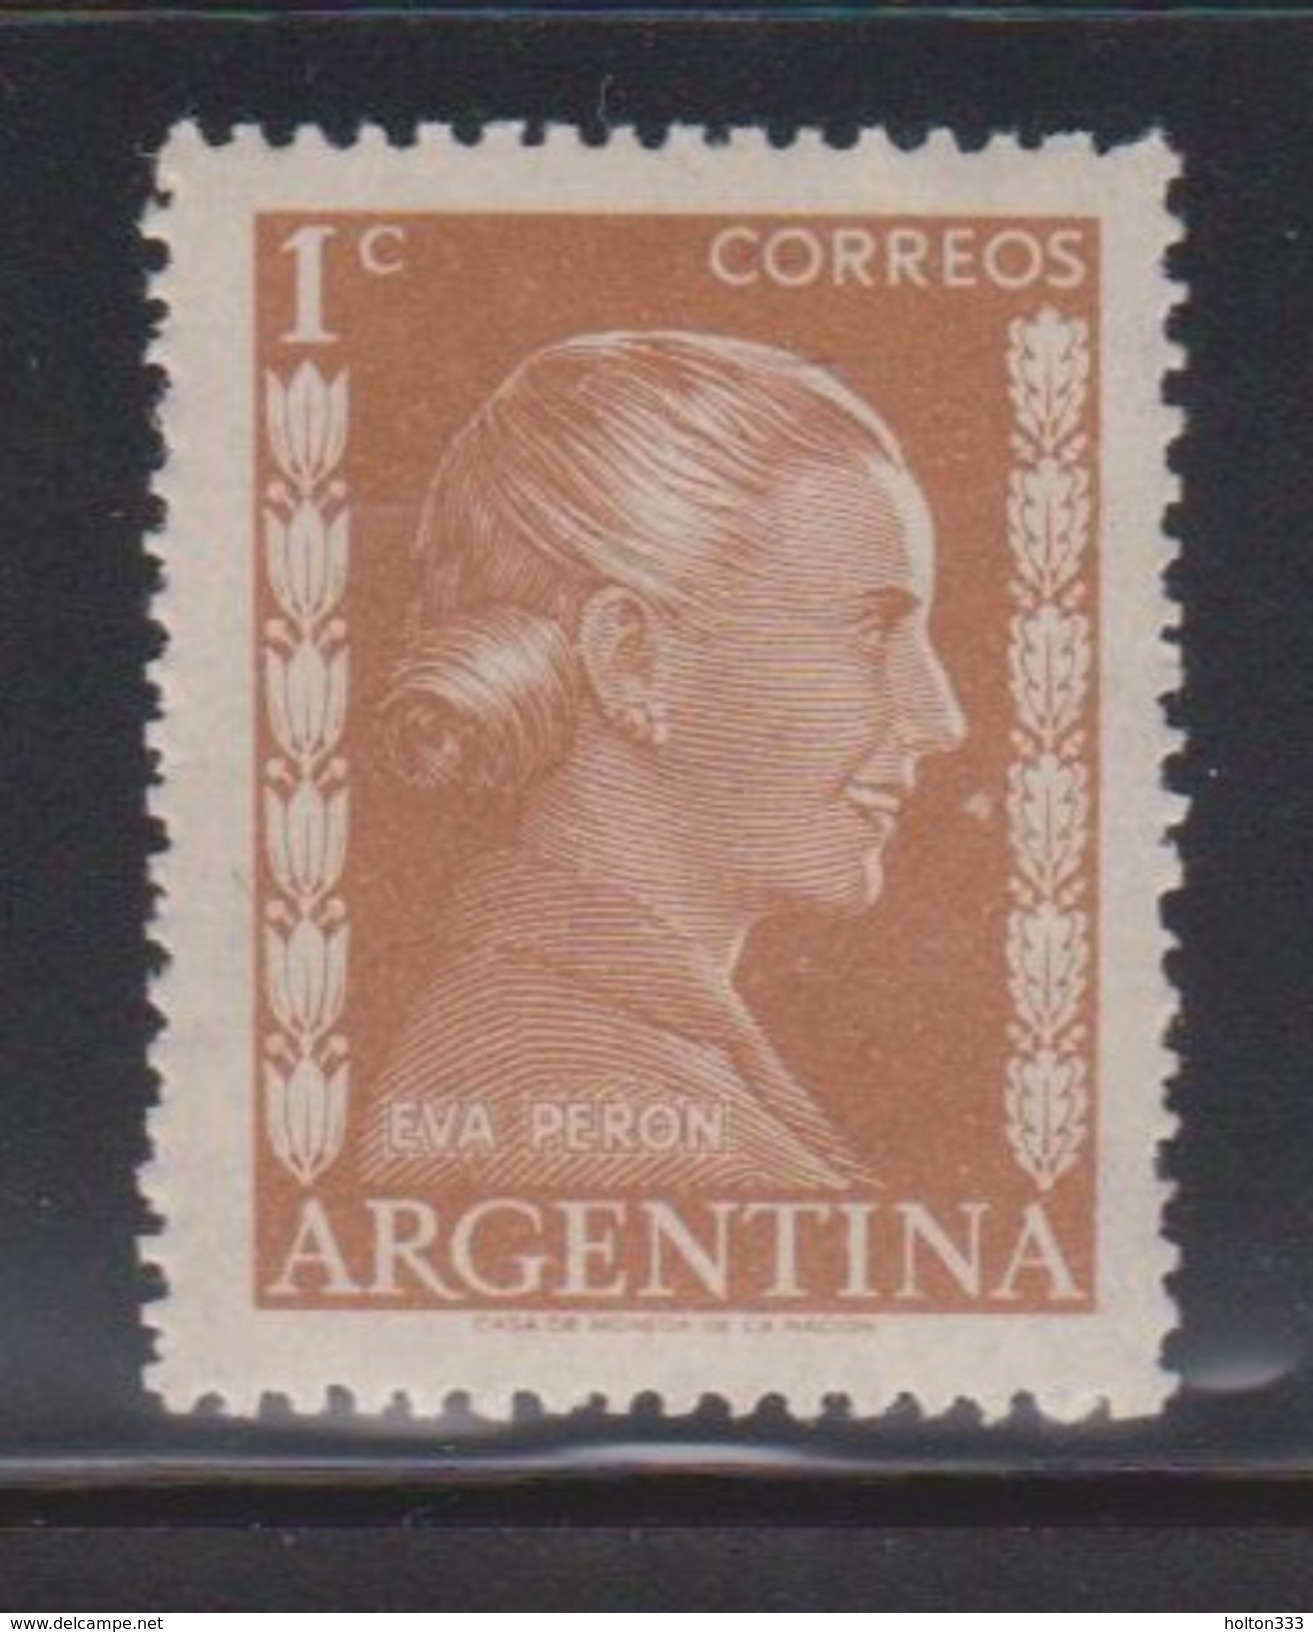 ARGENTINA Scott # 599 Mint Hinged - Eva Peron - Unused Stamps